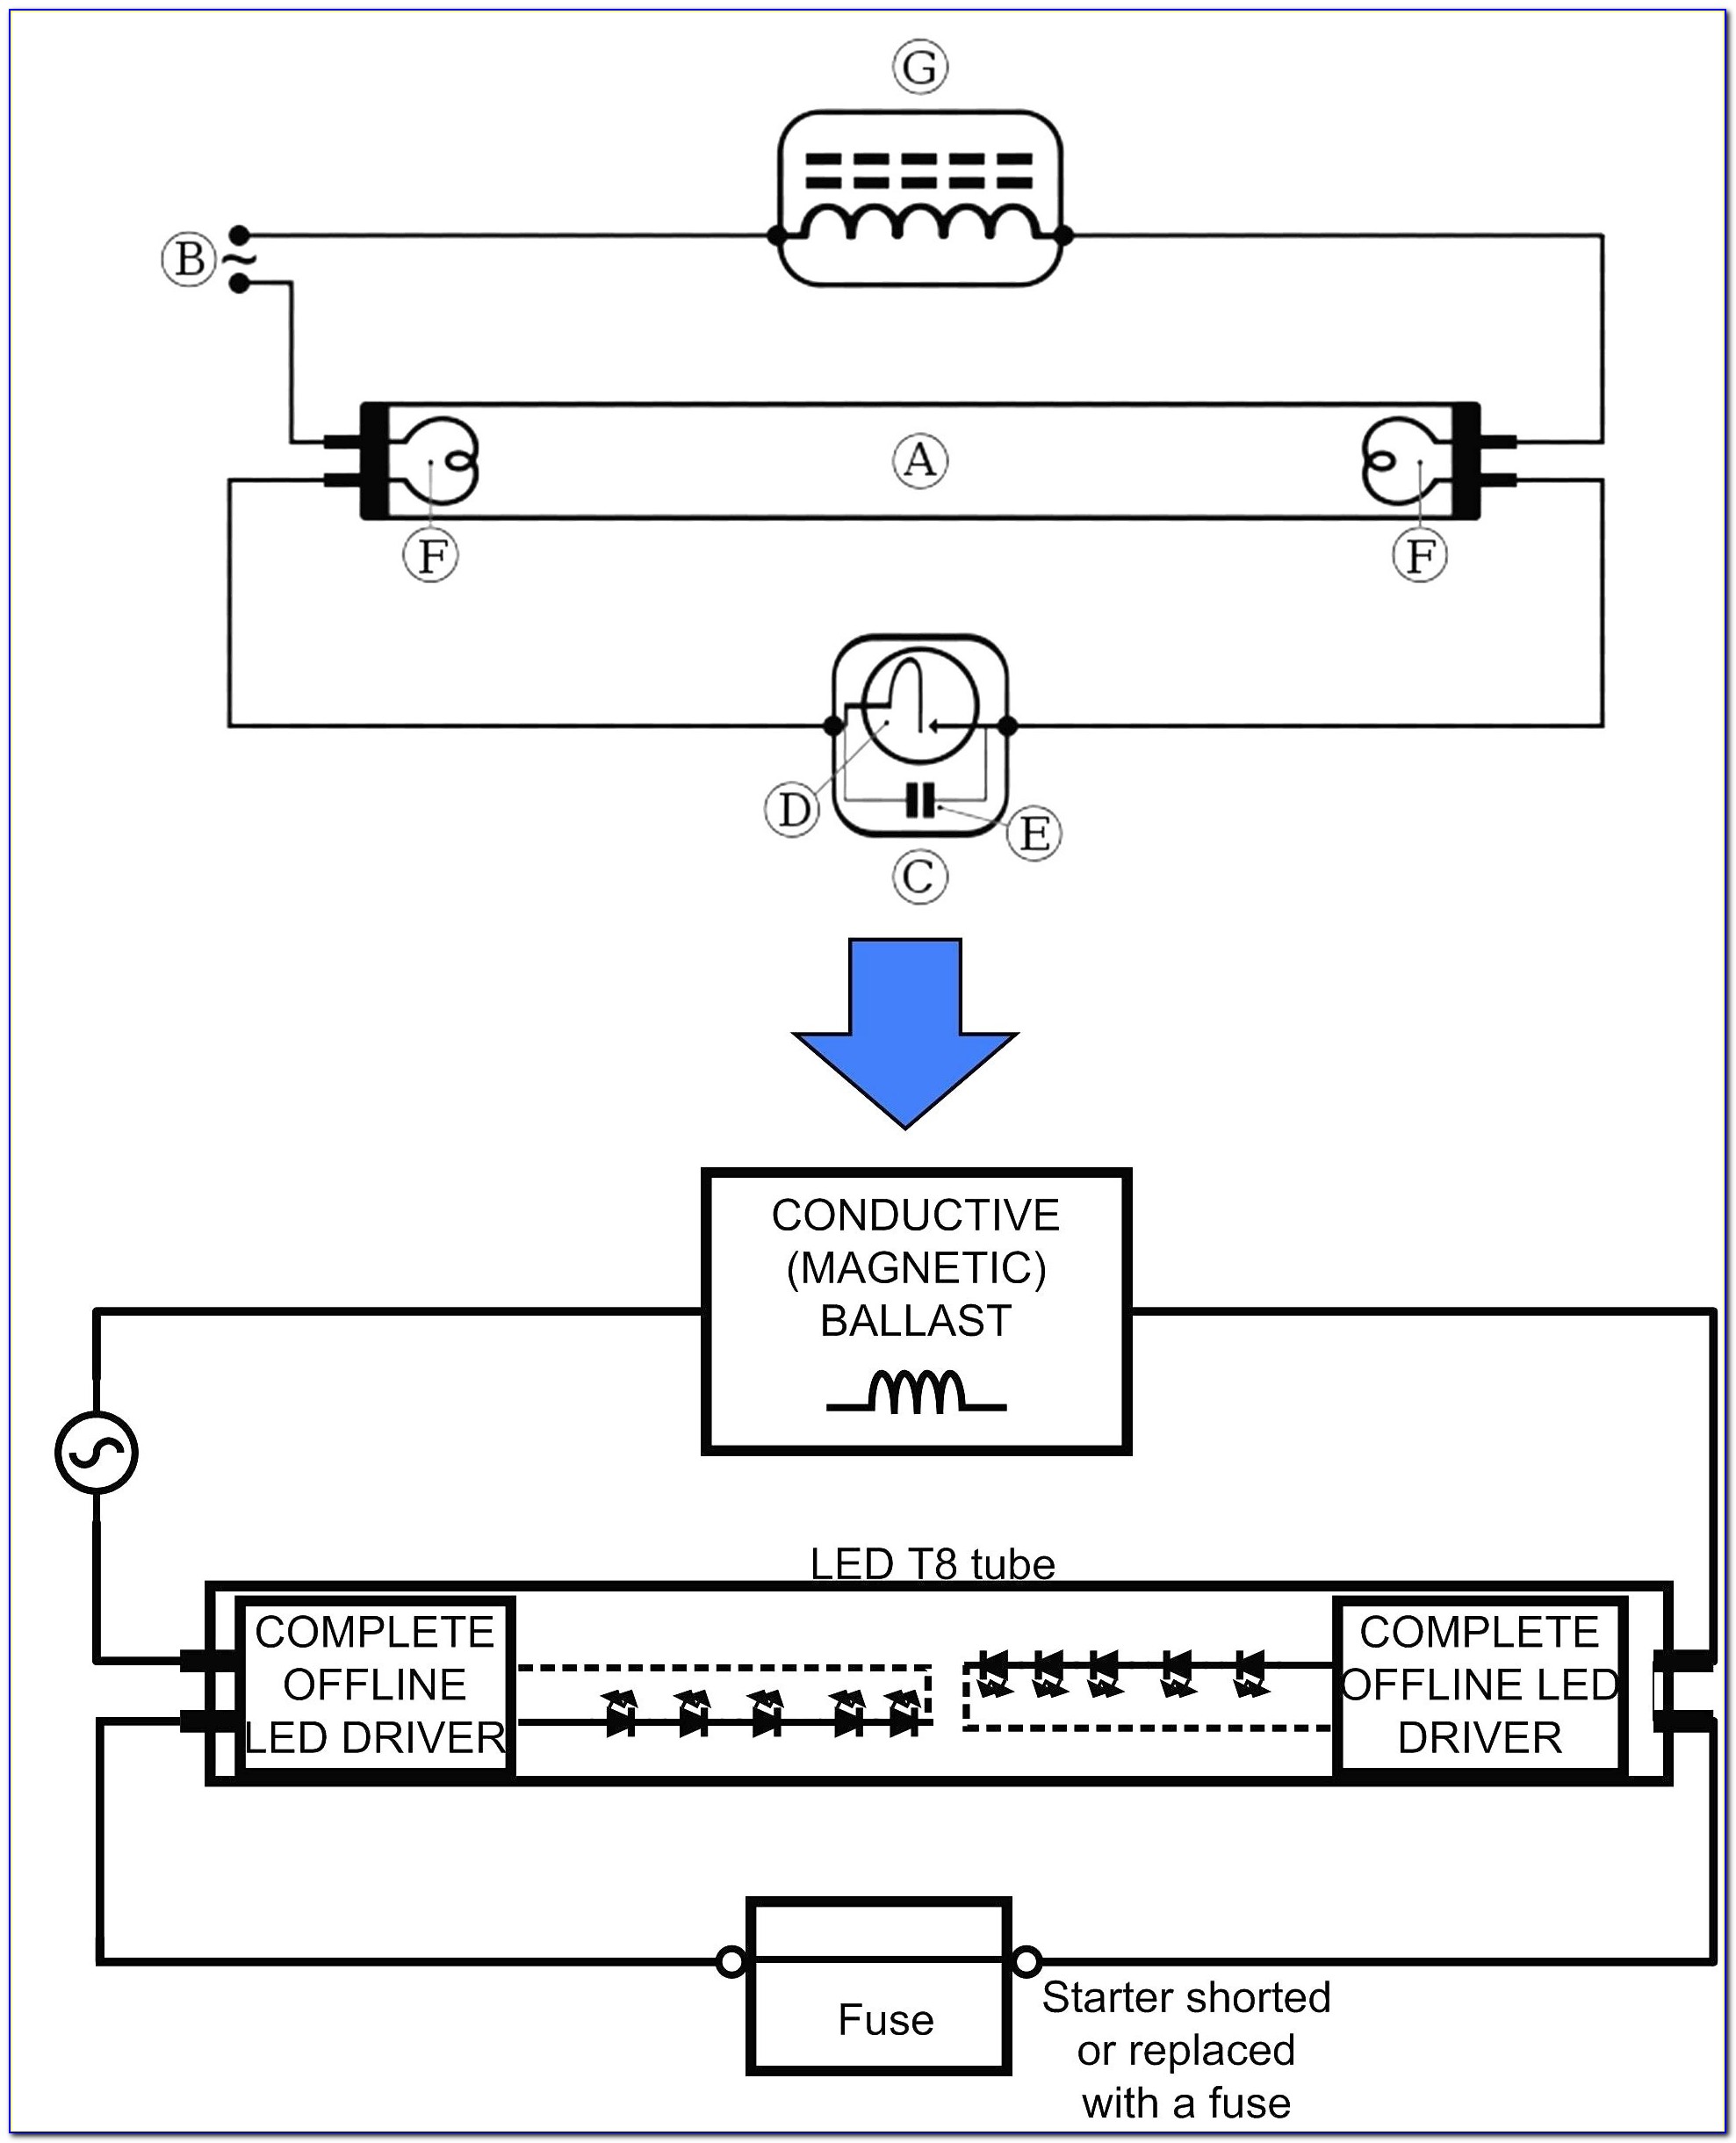 Led Series T8 Tube Wiring Diagram